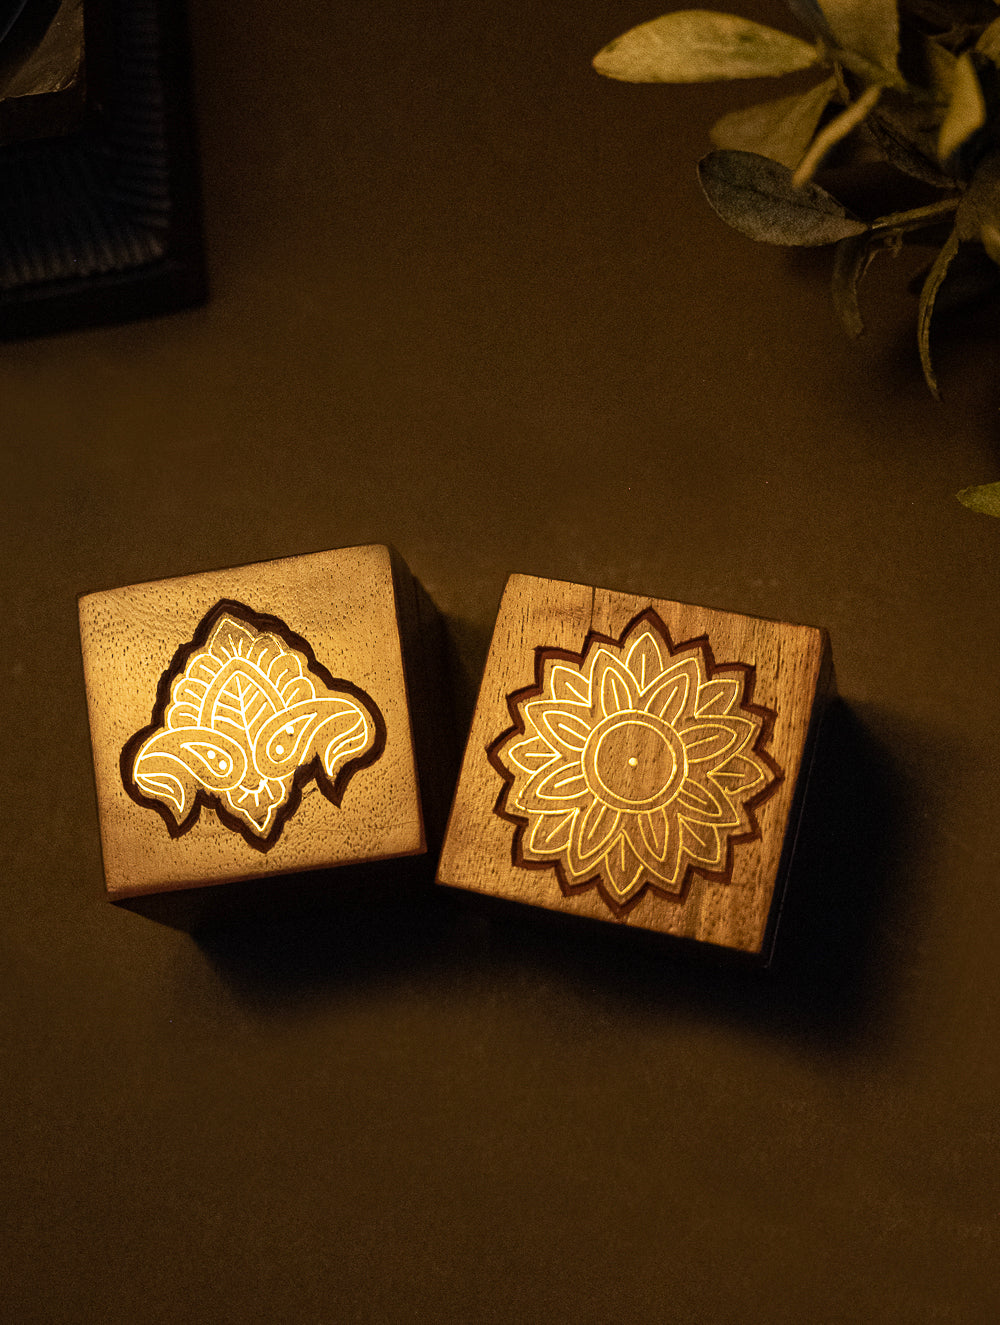 Load image into Gallery viewer, Tarakashi Wooden Inlay Decorative Box- Motifs